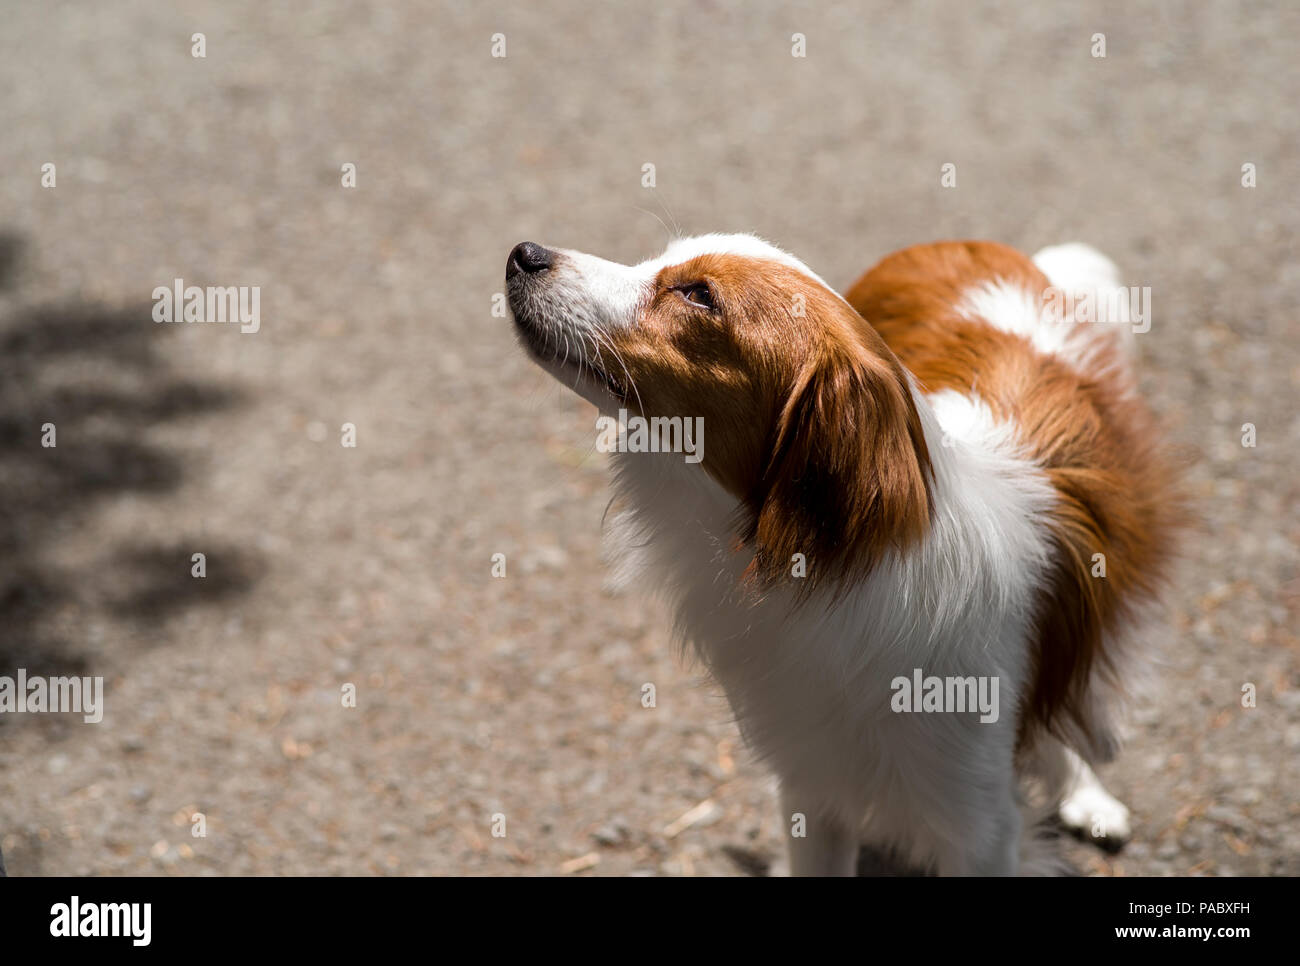 Kooikerhondje Dog, Show Dog, Free Off-leash on Path, Rare Herding Breed from The Netherlands Stock Photo